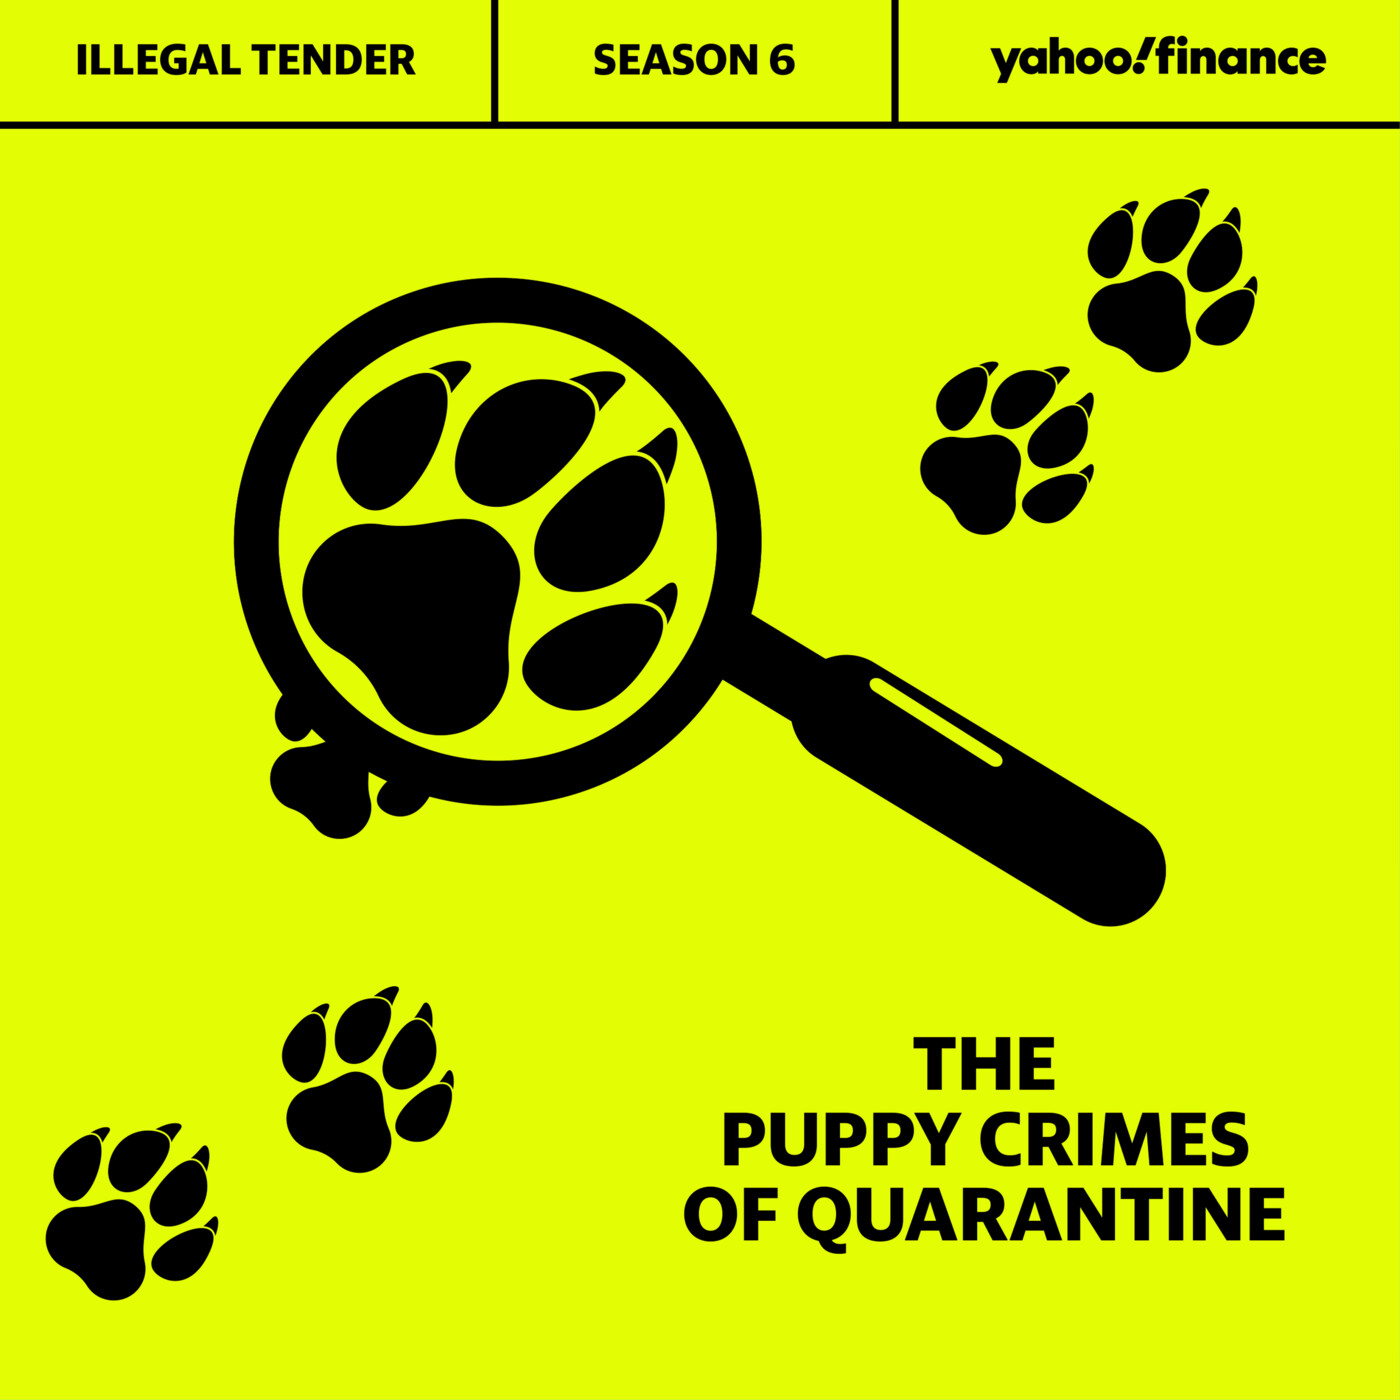 (Trailer) Illegal Tender Season 6: The puppy crimes of quarantine